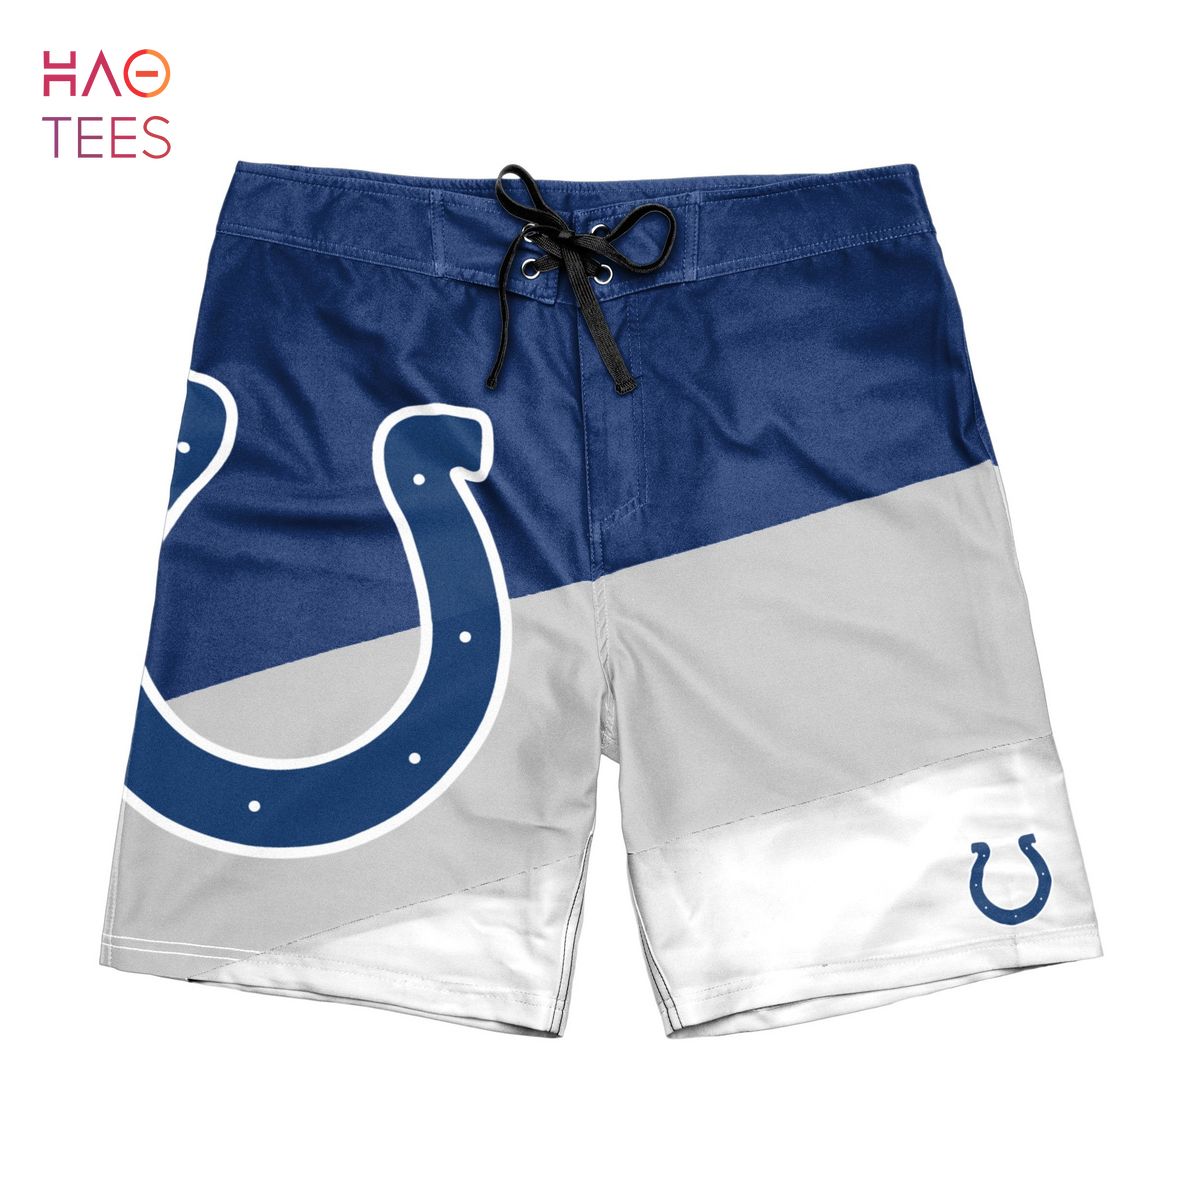 Indianapolis Colts NFL Mens Color Dive Boardshorts